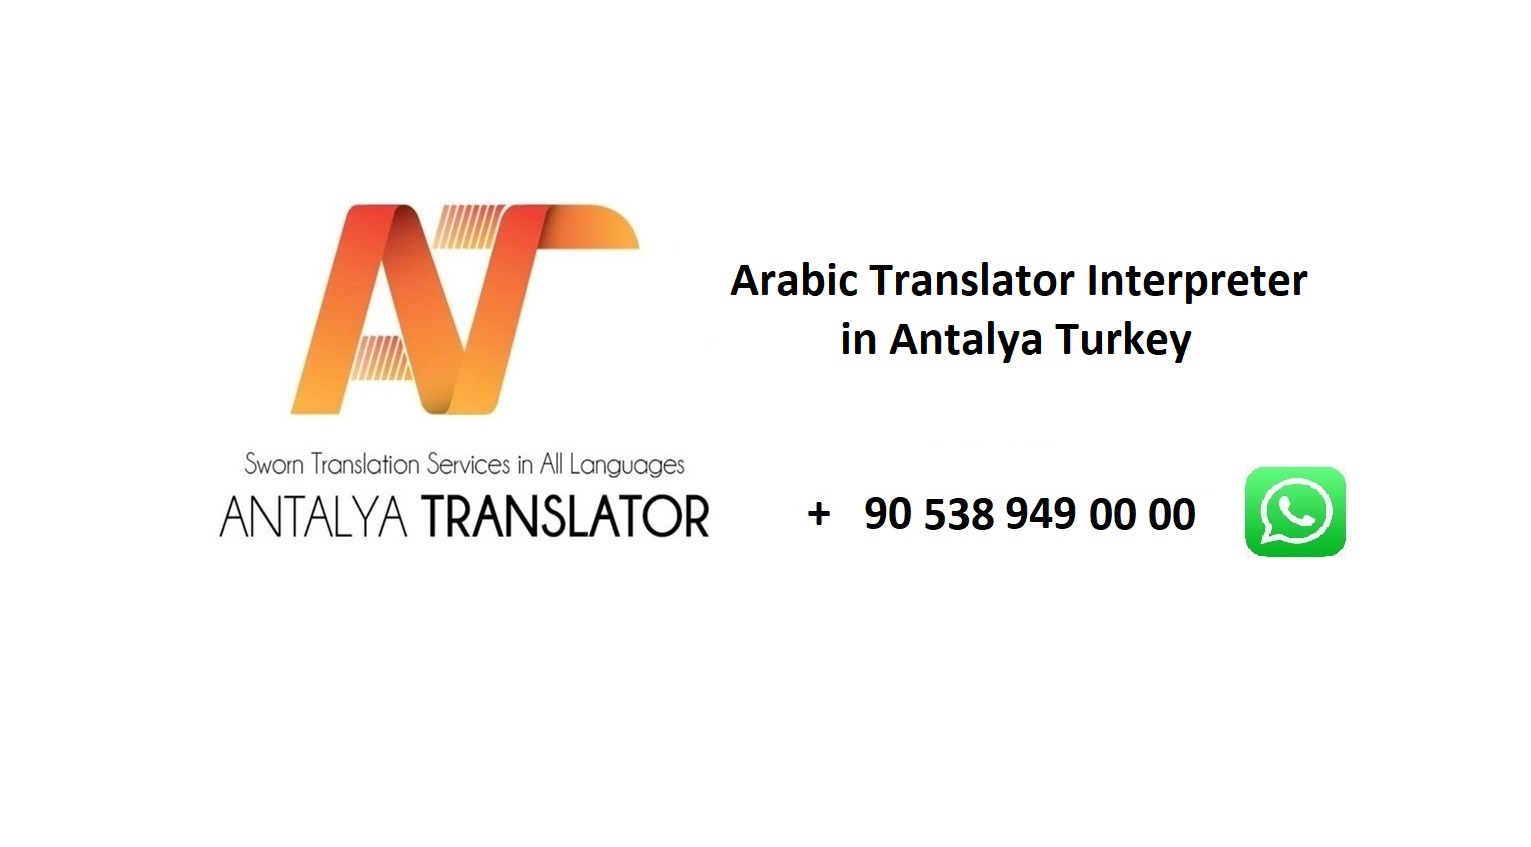 Arabic Translator Interpreter in Antalya Turkey